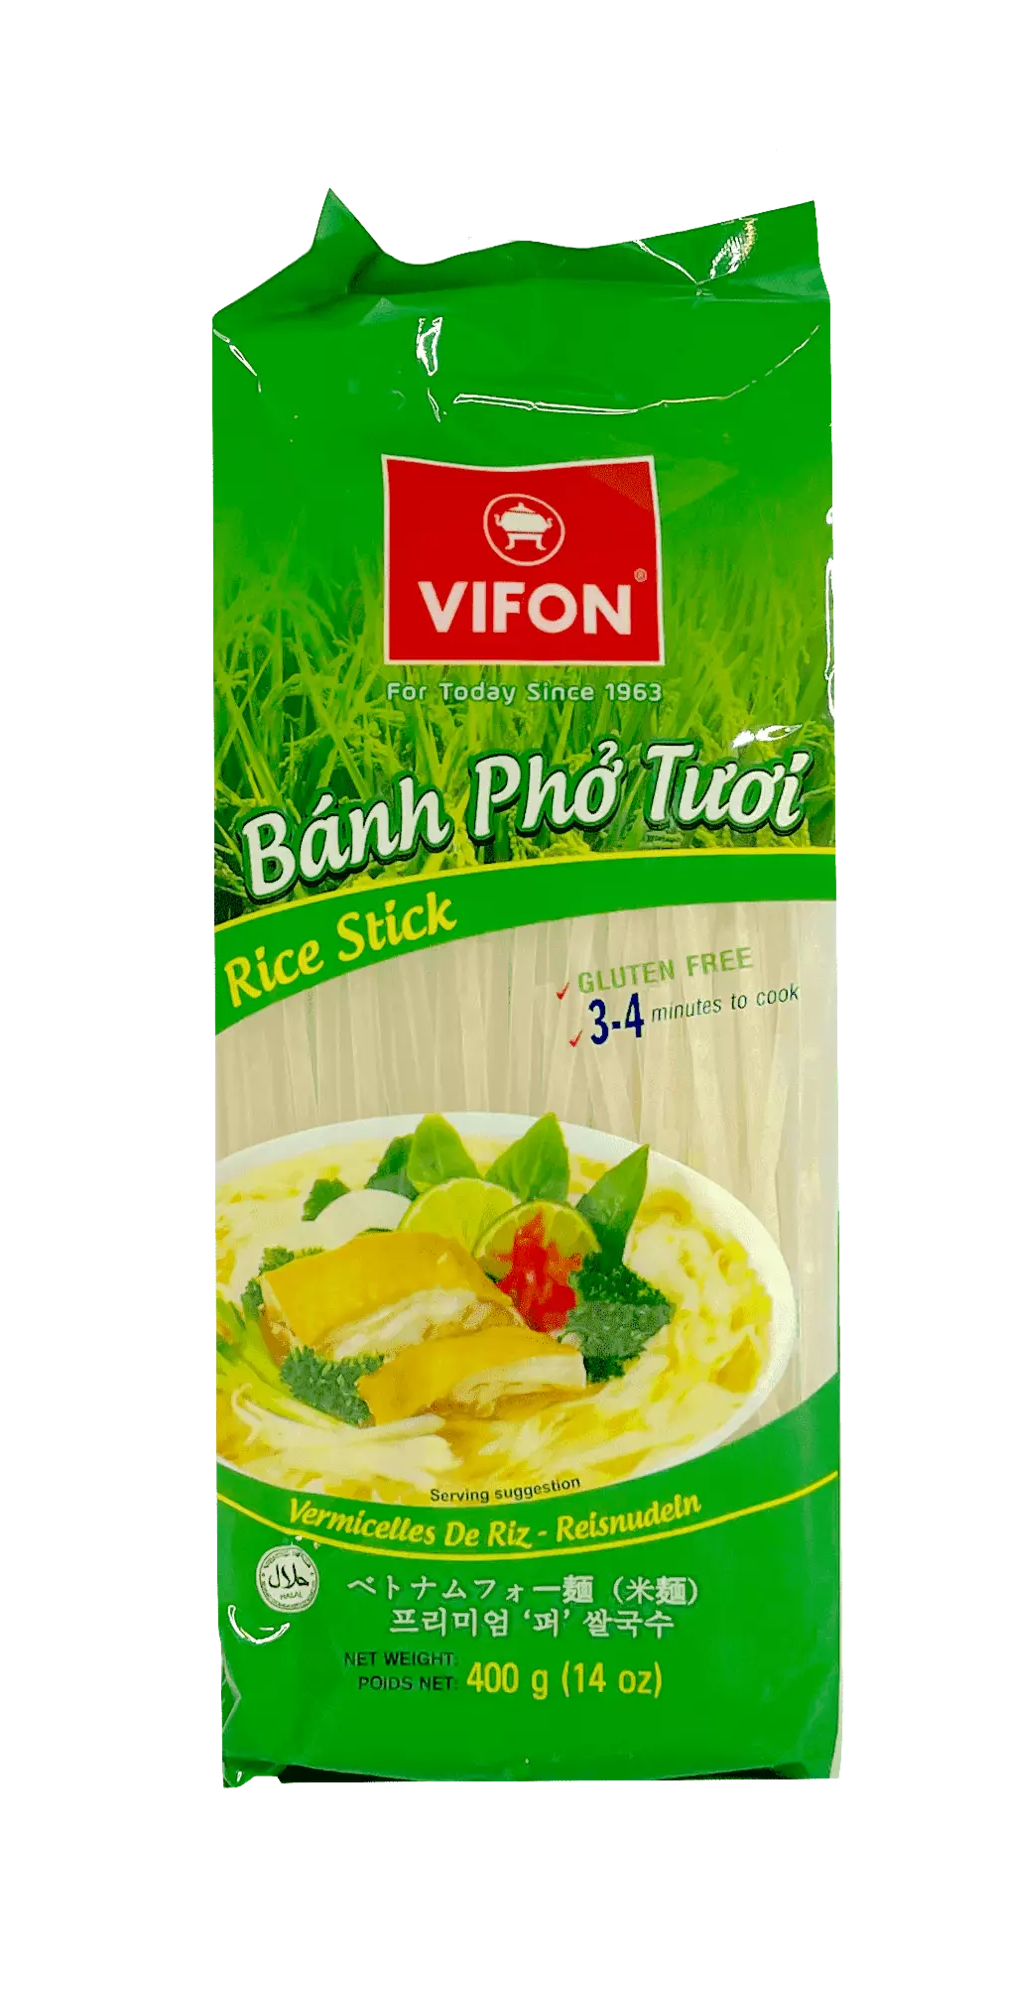 越南米粉 Pho Tuoi 无麸质 400g Vifon